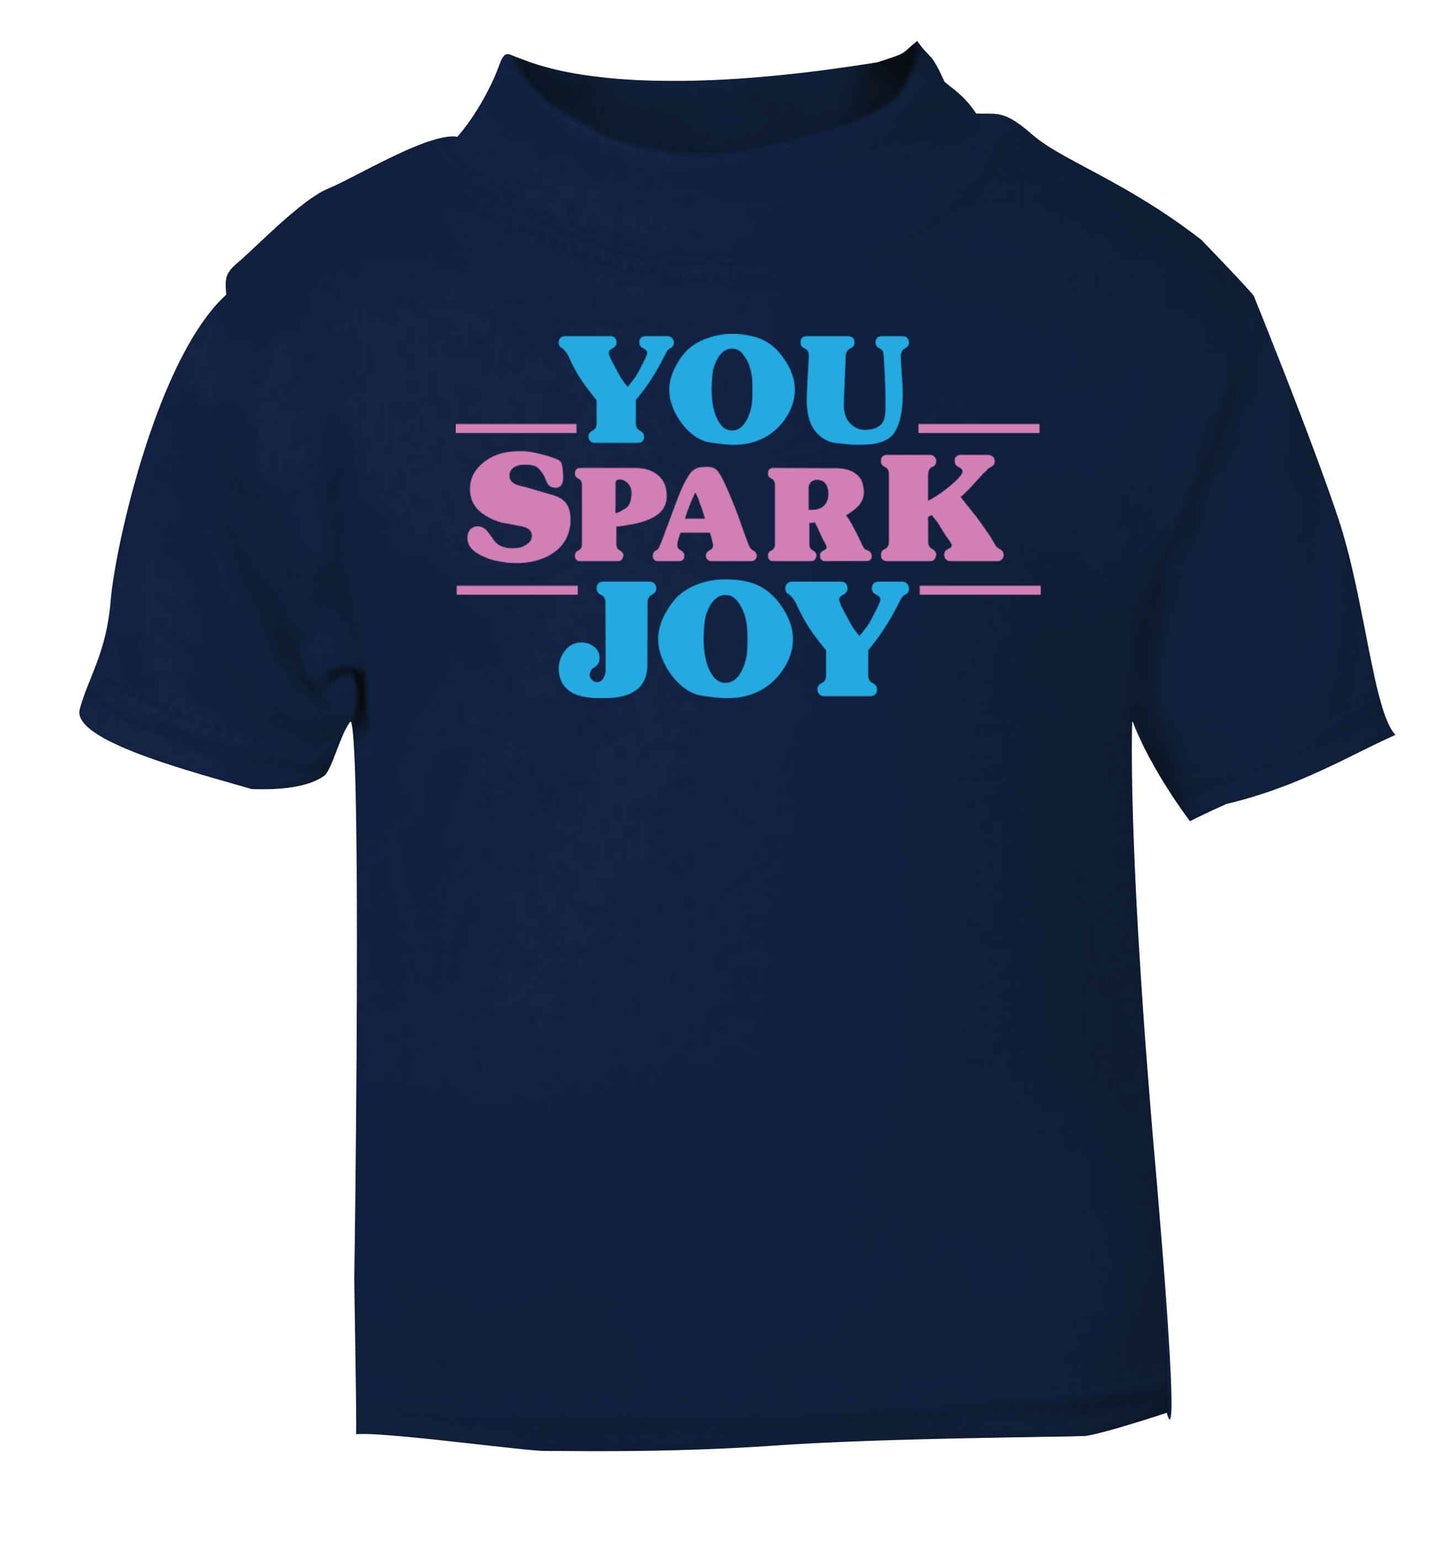 You spark joy navy baby toddler Tshirt 2 Years